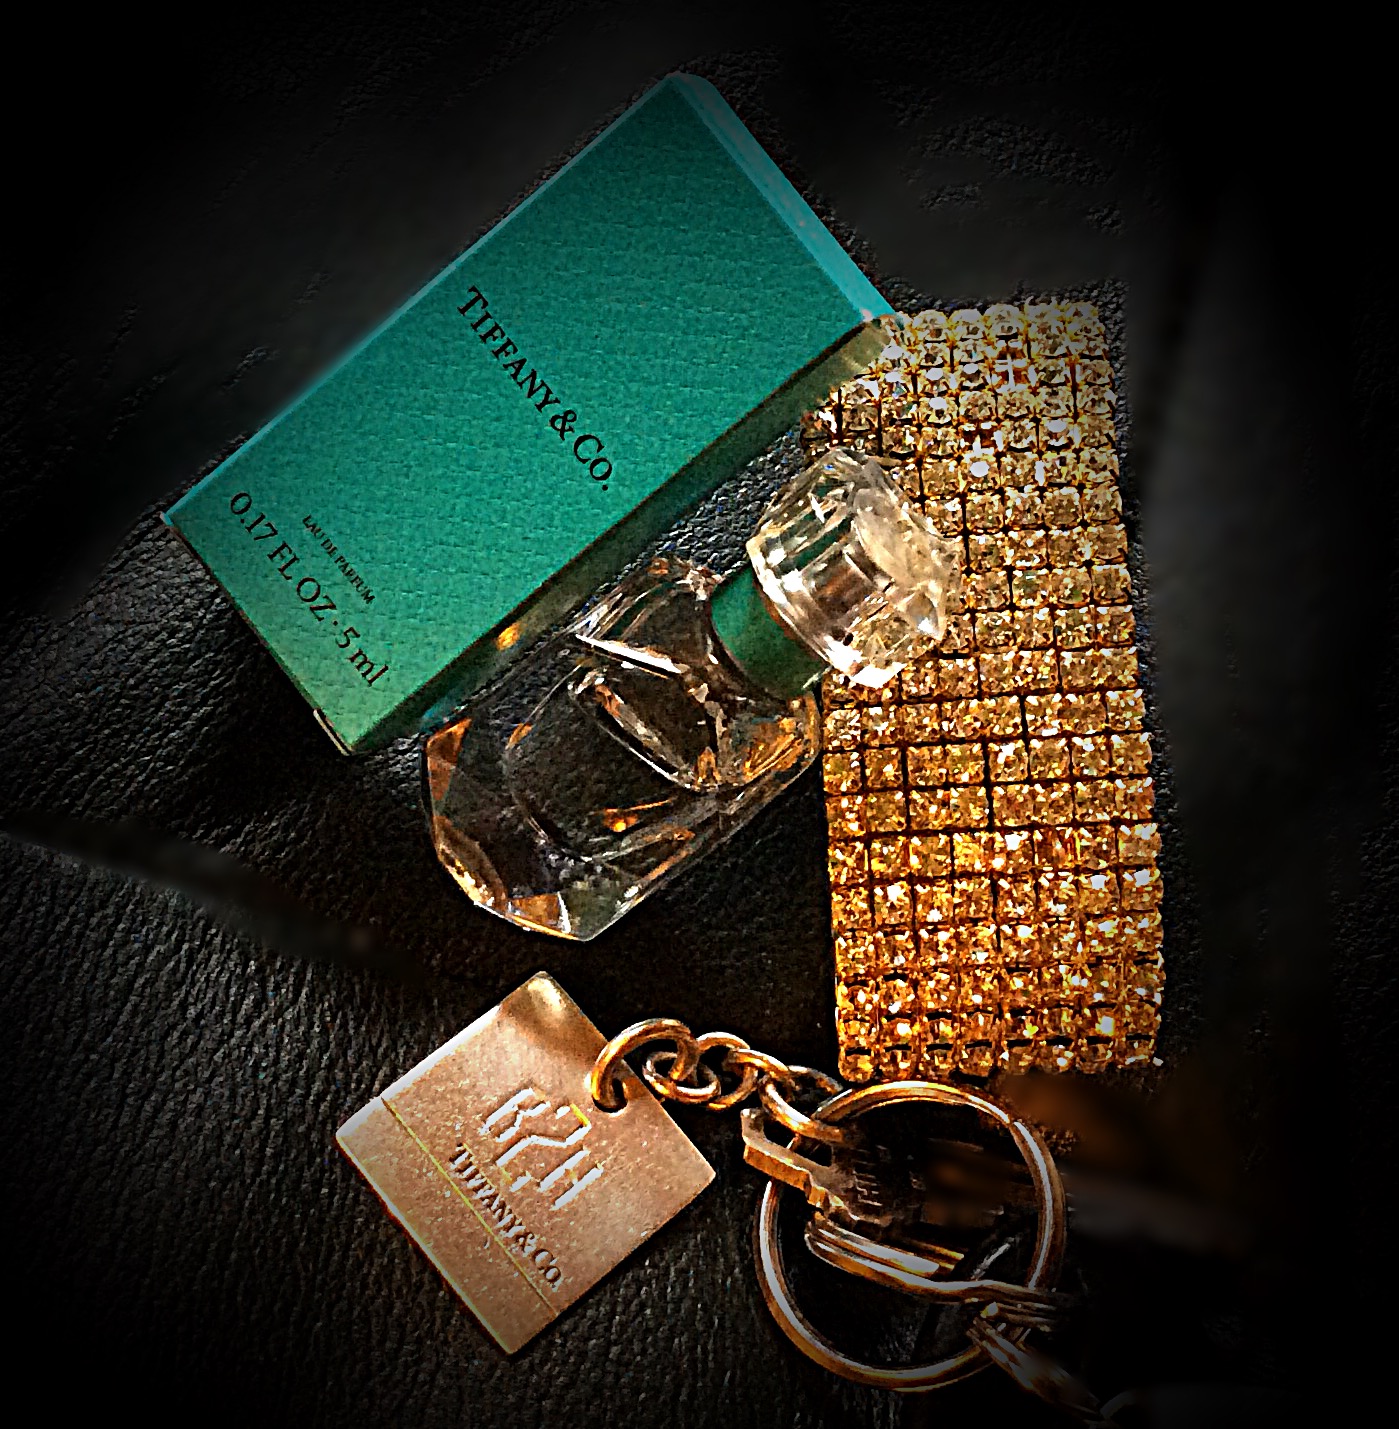 AliceGraceBeauty / UK Beauty Blog: Tiffany & Co. Eau De Parfum Review